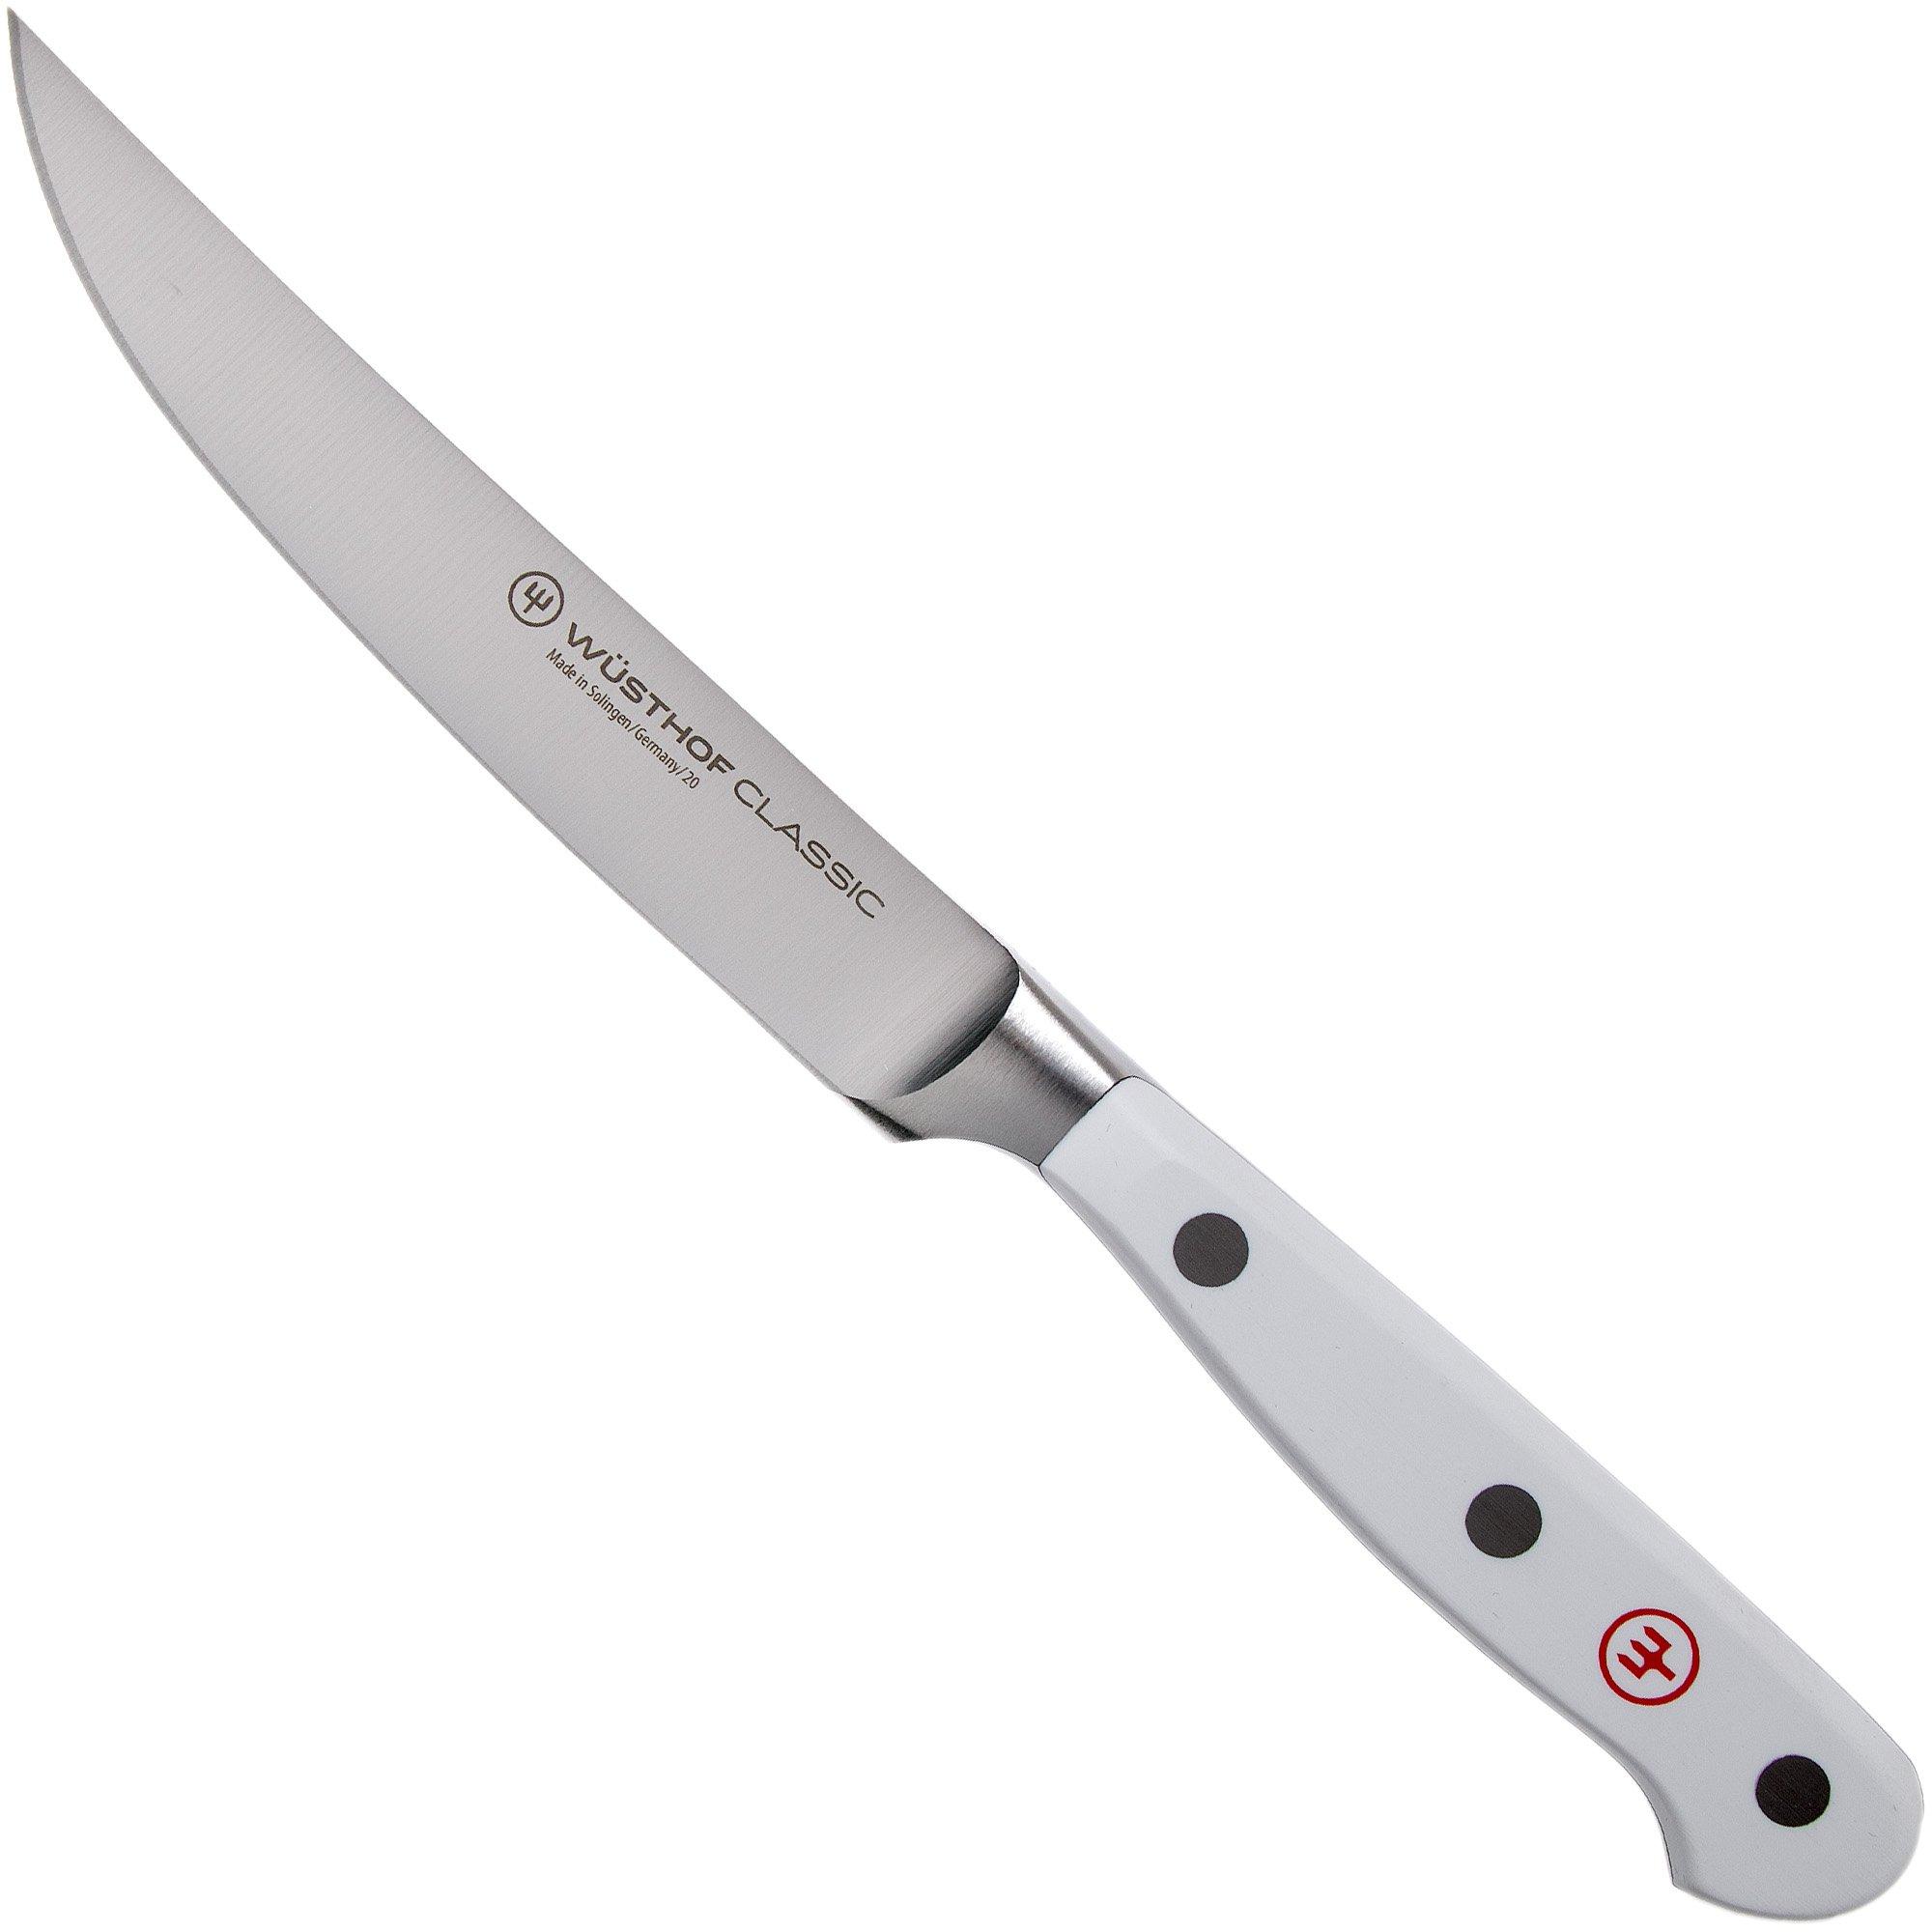 Wüsthof Classic White 6-piece knife set version santoku including block,  1090270601